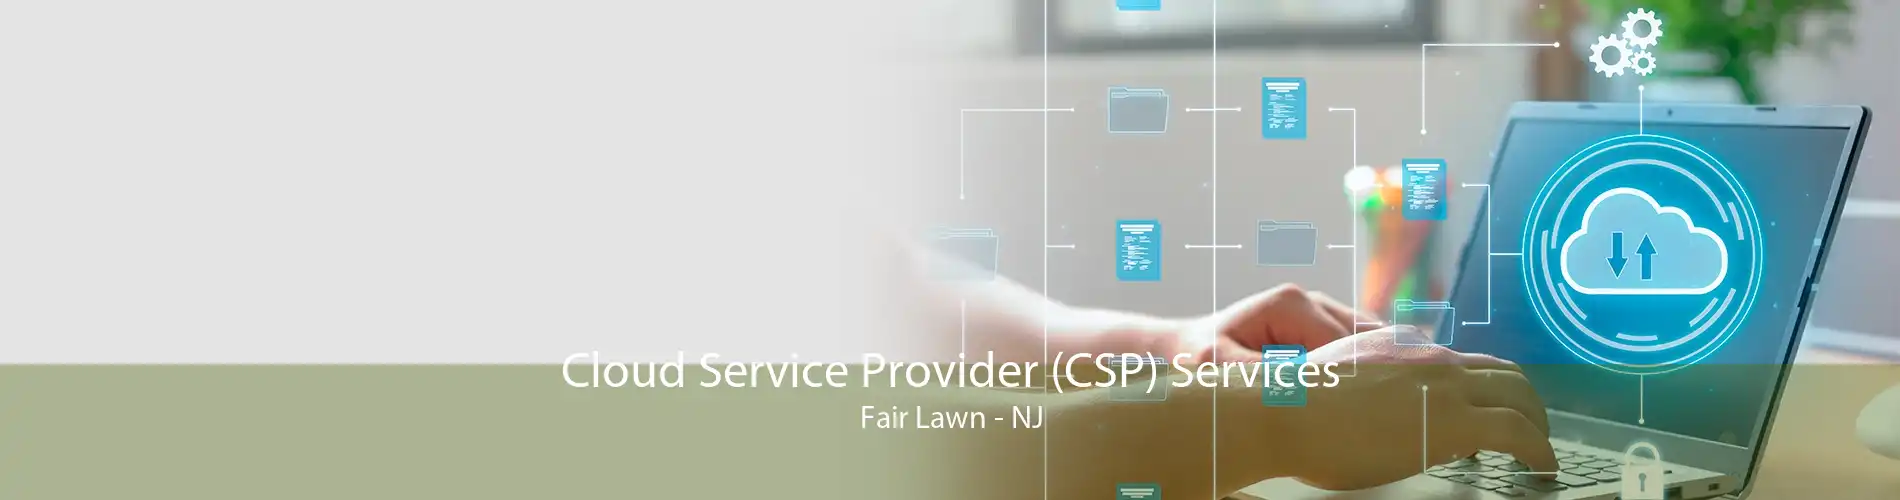 Cloud Service Provider (CSP) Services Fair Lawn - NJ